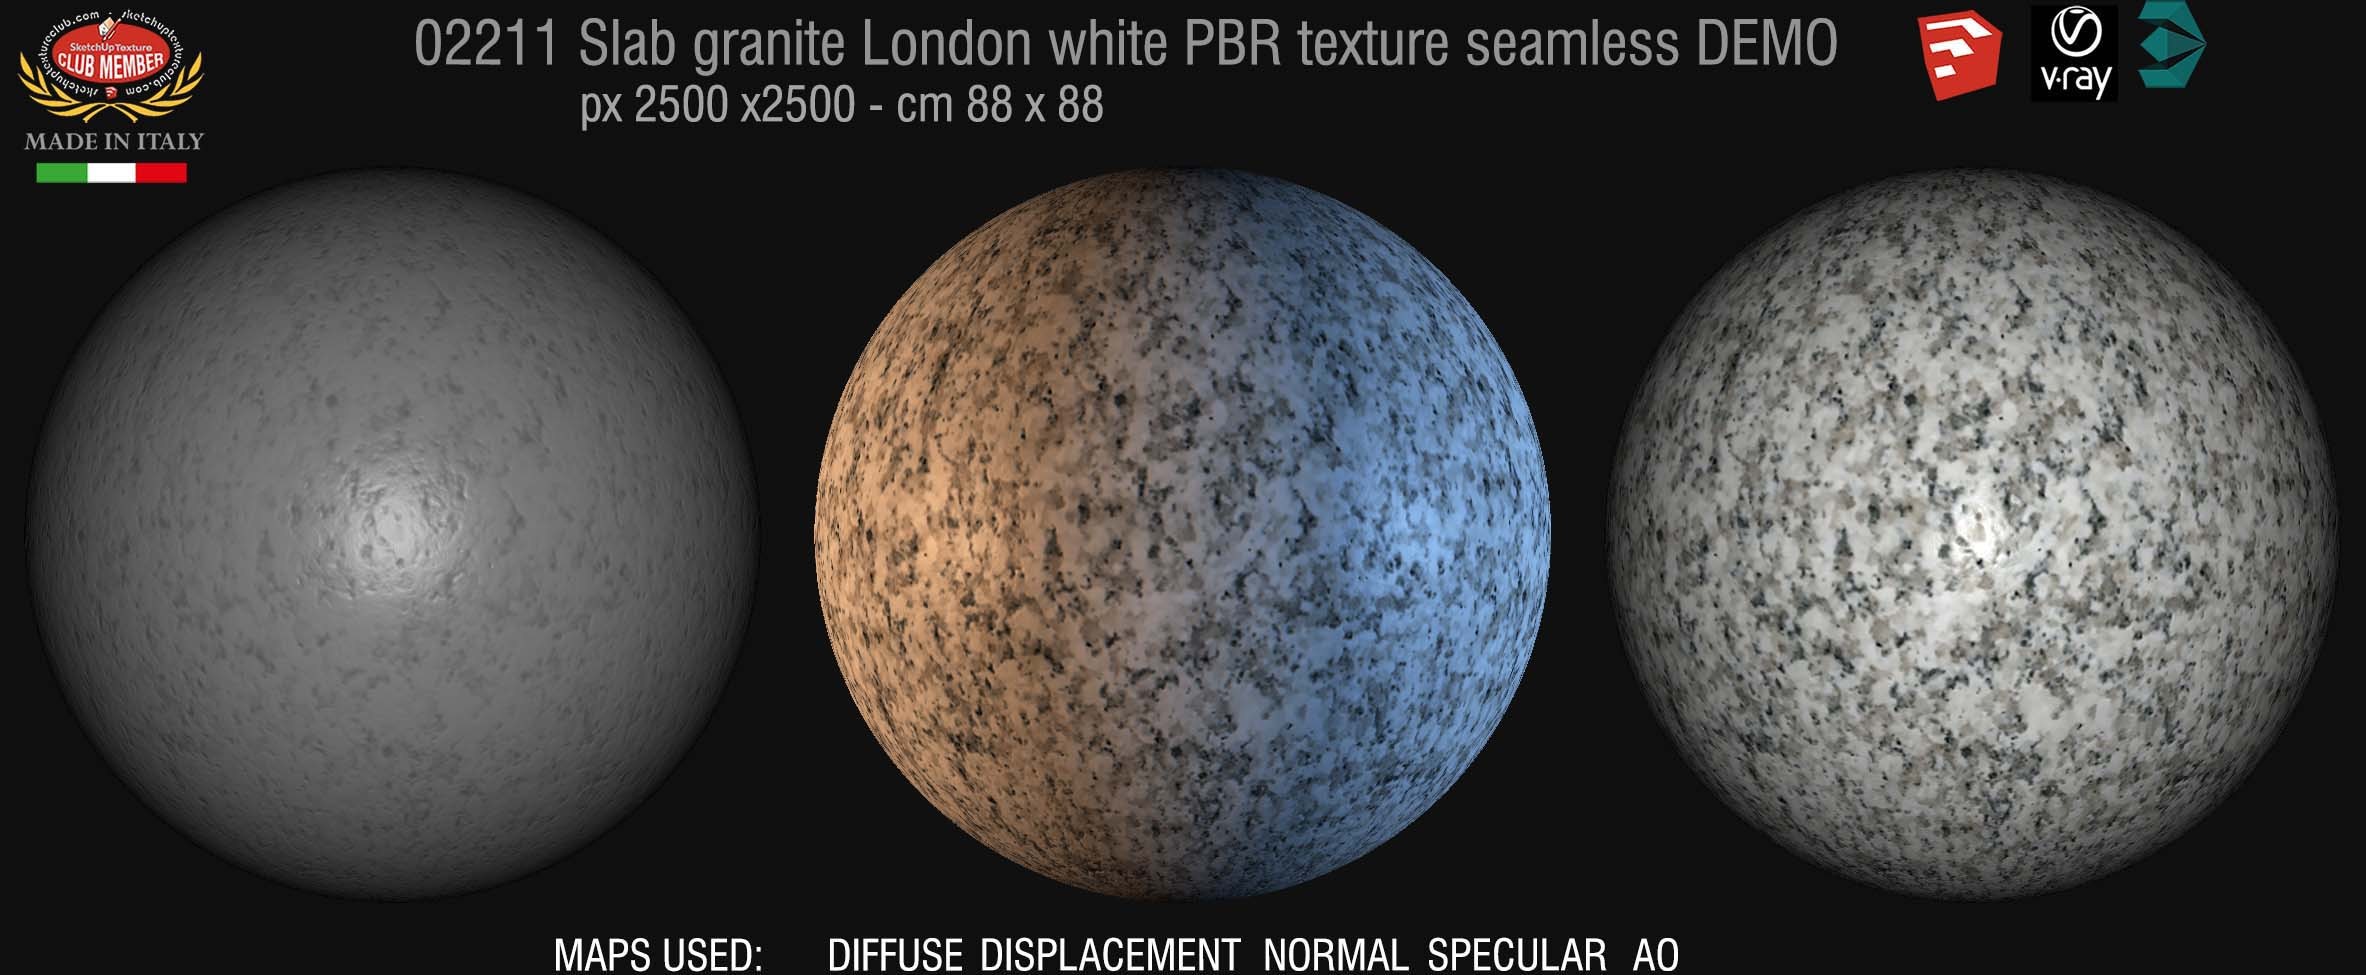 02211 slab granite london white PBR texture seamless DEMO